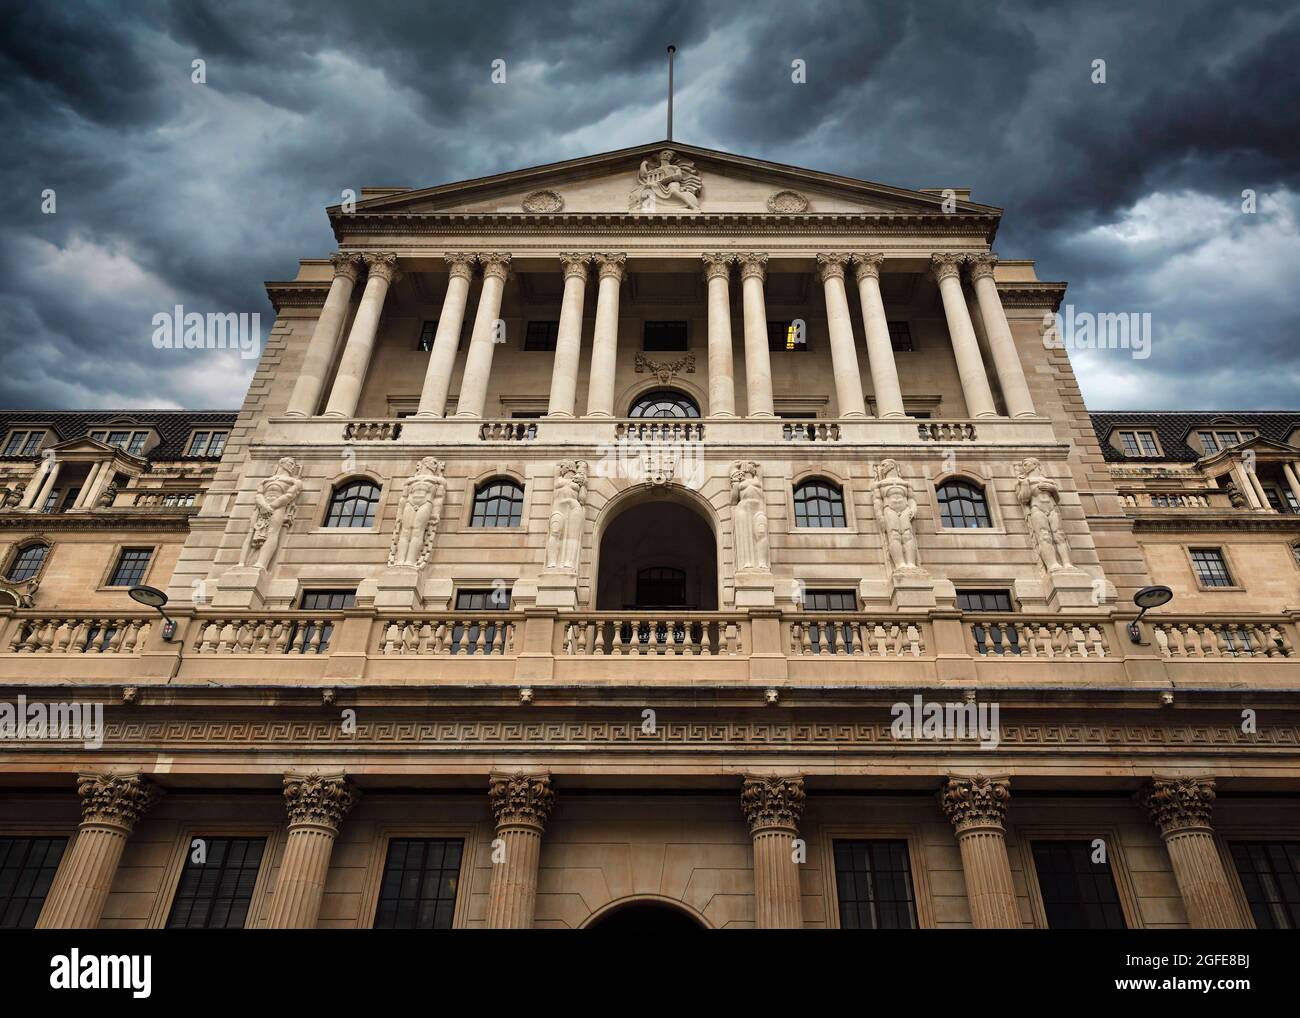 Bank of England Under Storm Clouds. Threadneedle Street, London, England, United Kingdom Stock Photo